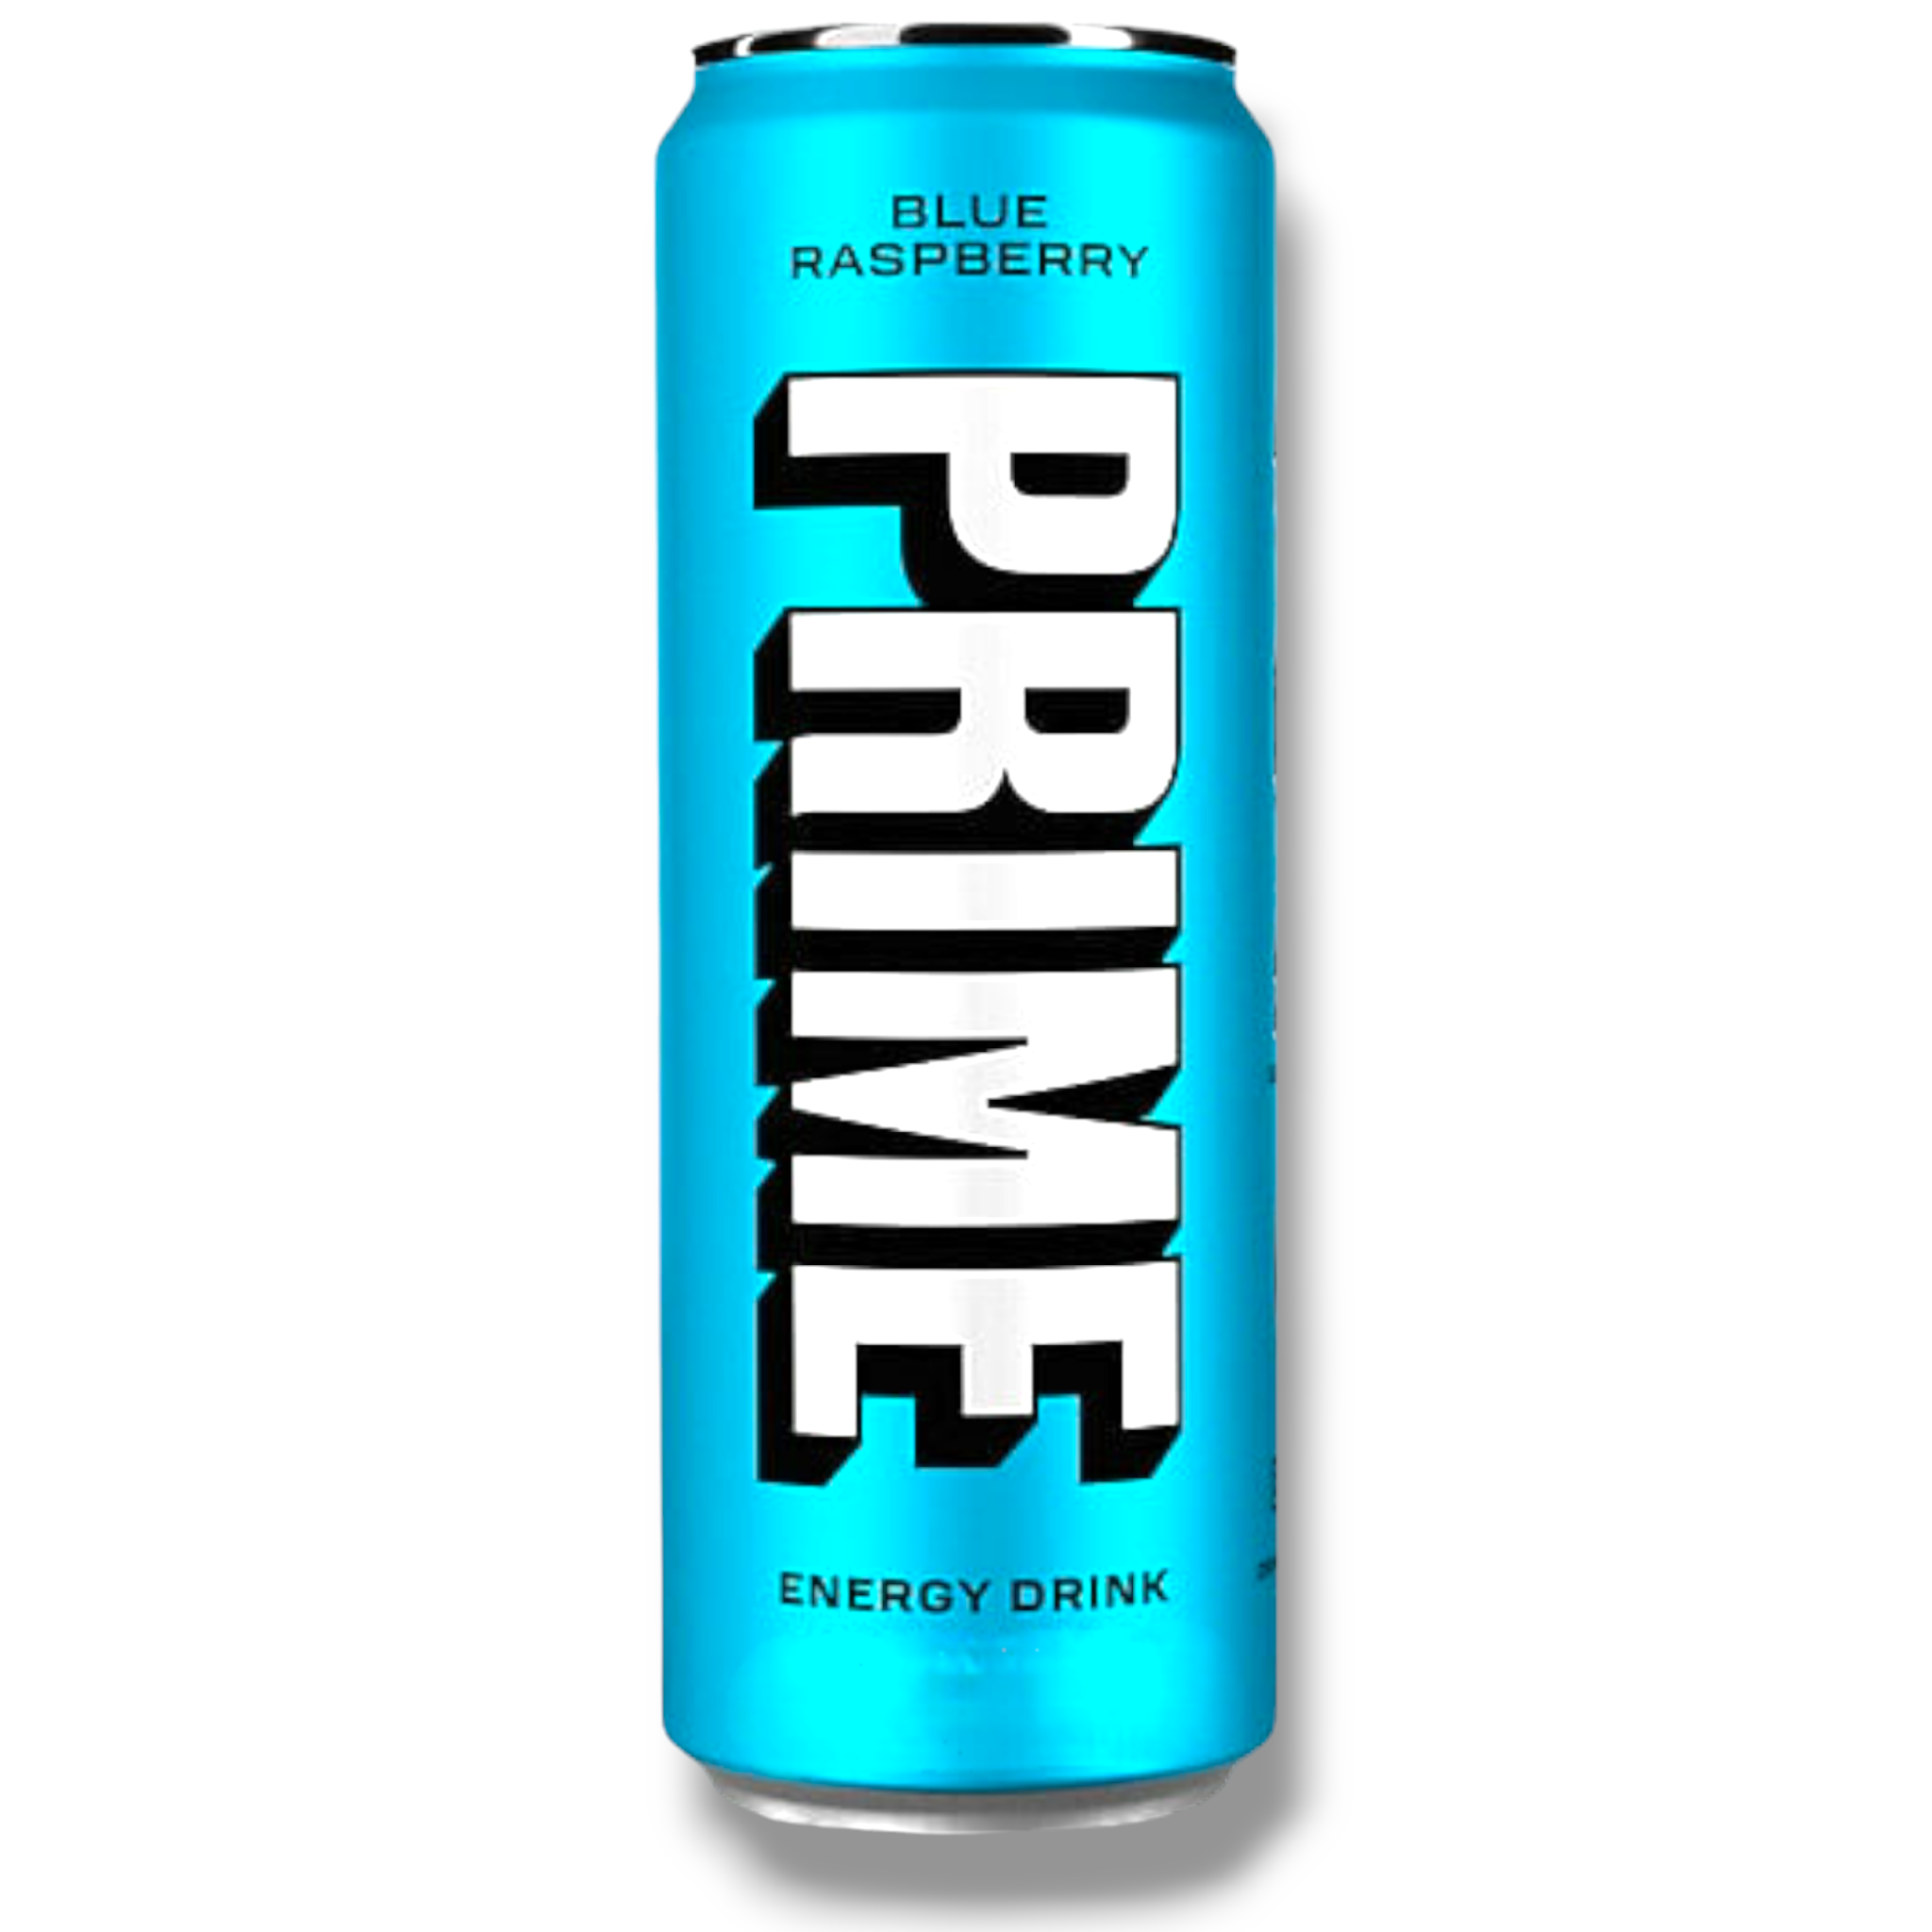 Prime Hydration Drink - Blue Raspberry 330ml Dose- Sportdrink von Logan Paul & KSI/ 140mg Koffein